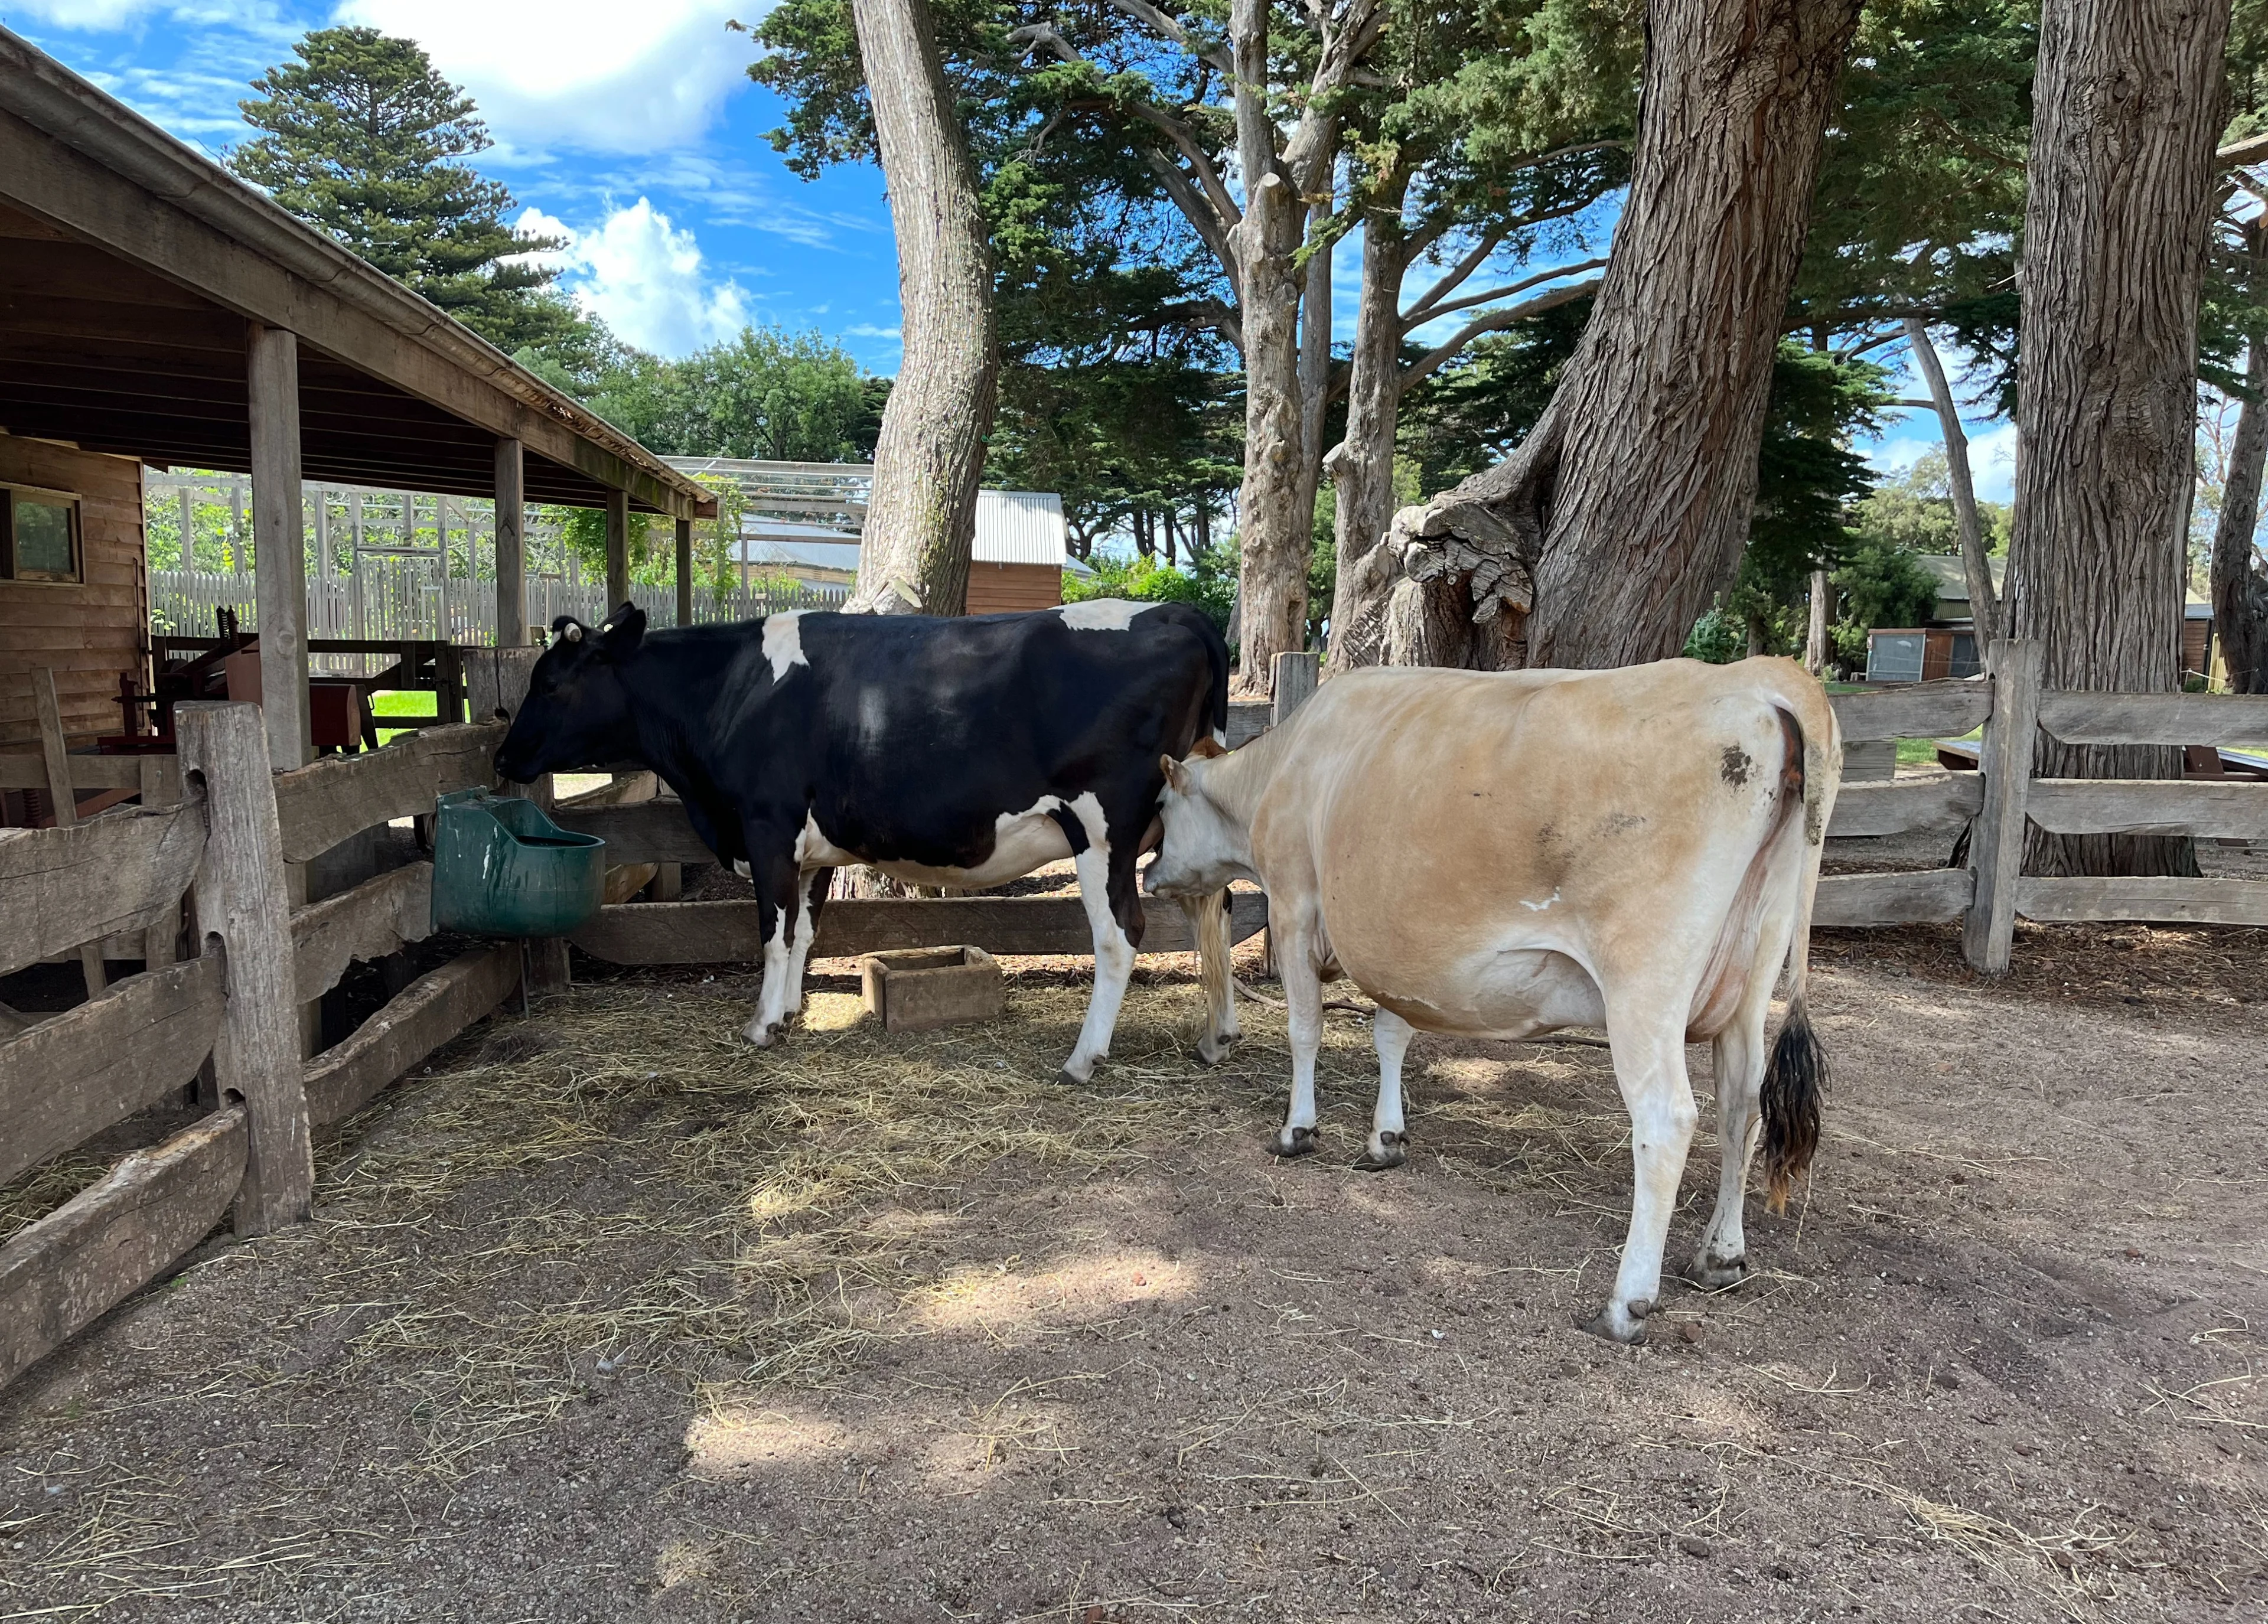 Calf feeding from a cow at Churchill Island Heritage Farm, Phillip Island, Victoria.